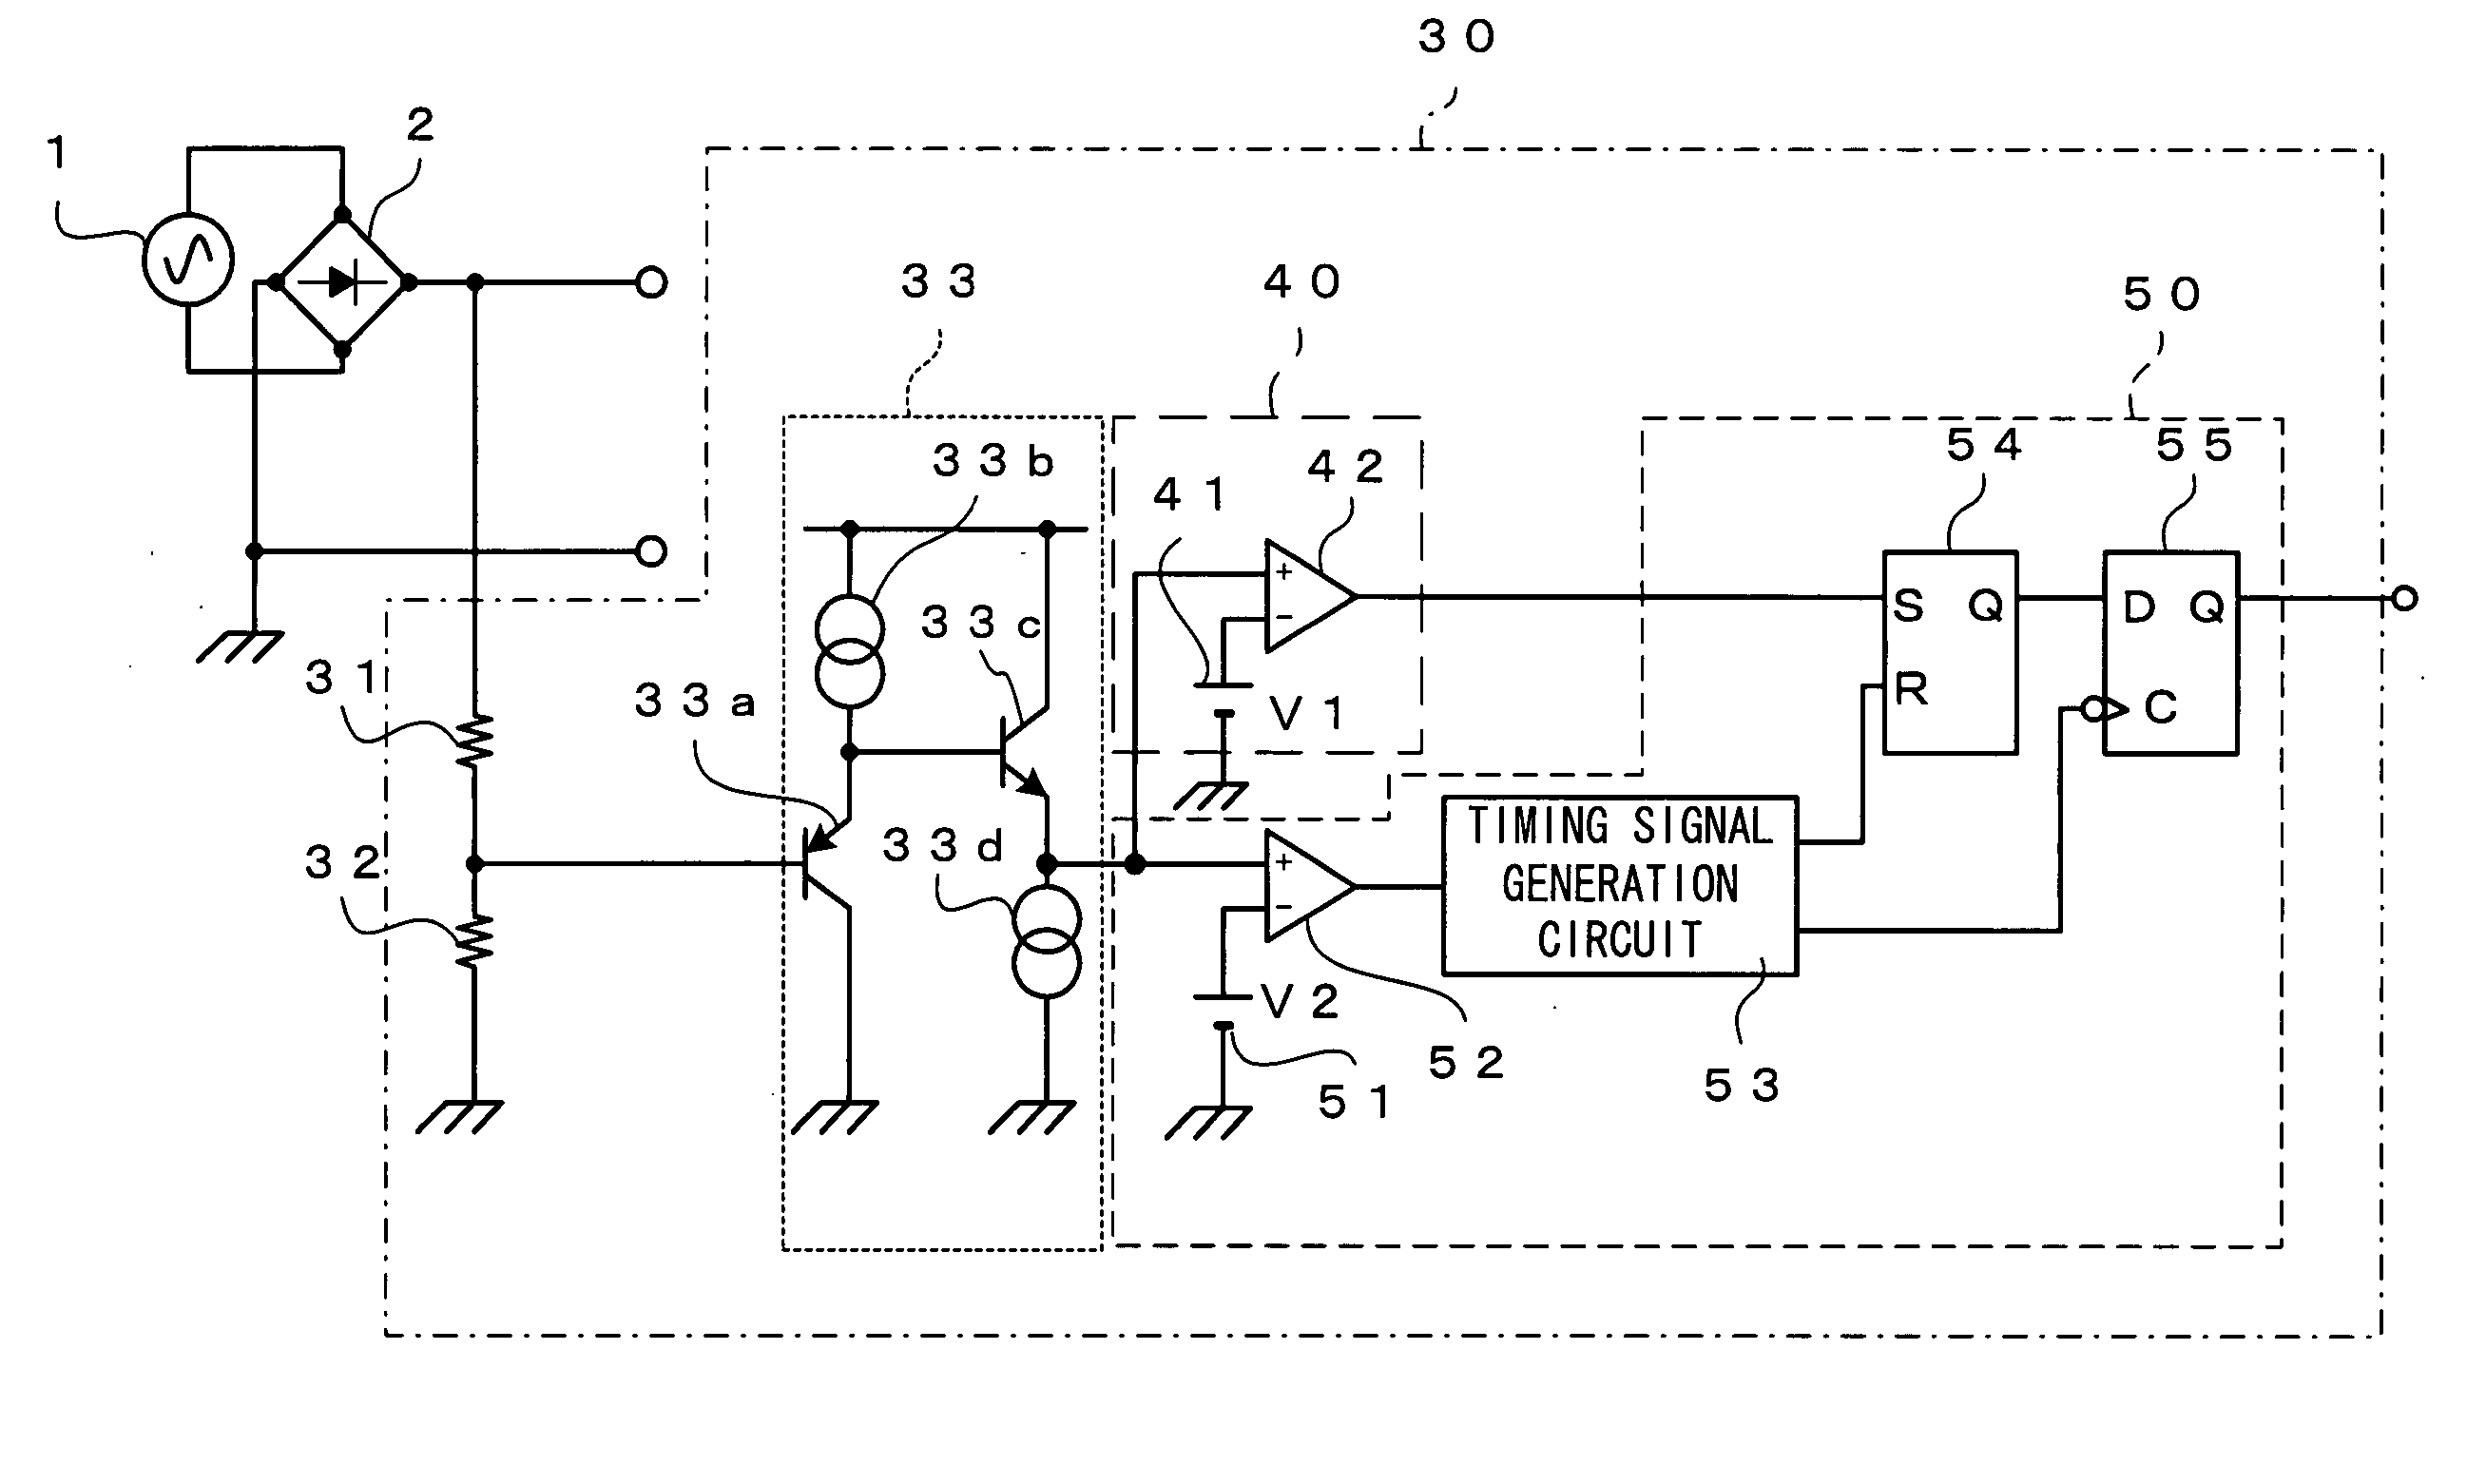 Ac signal level detection circuit